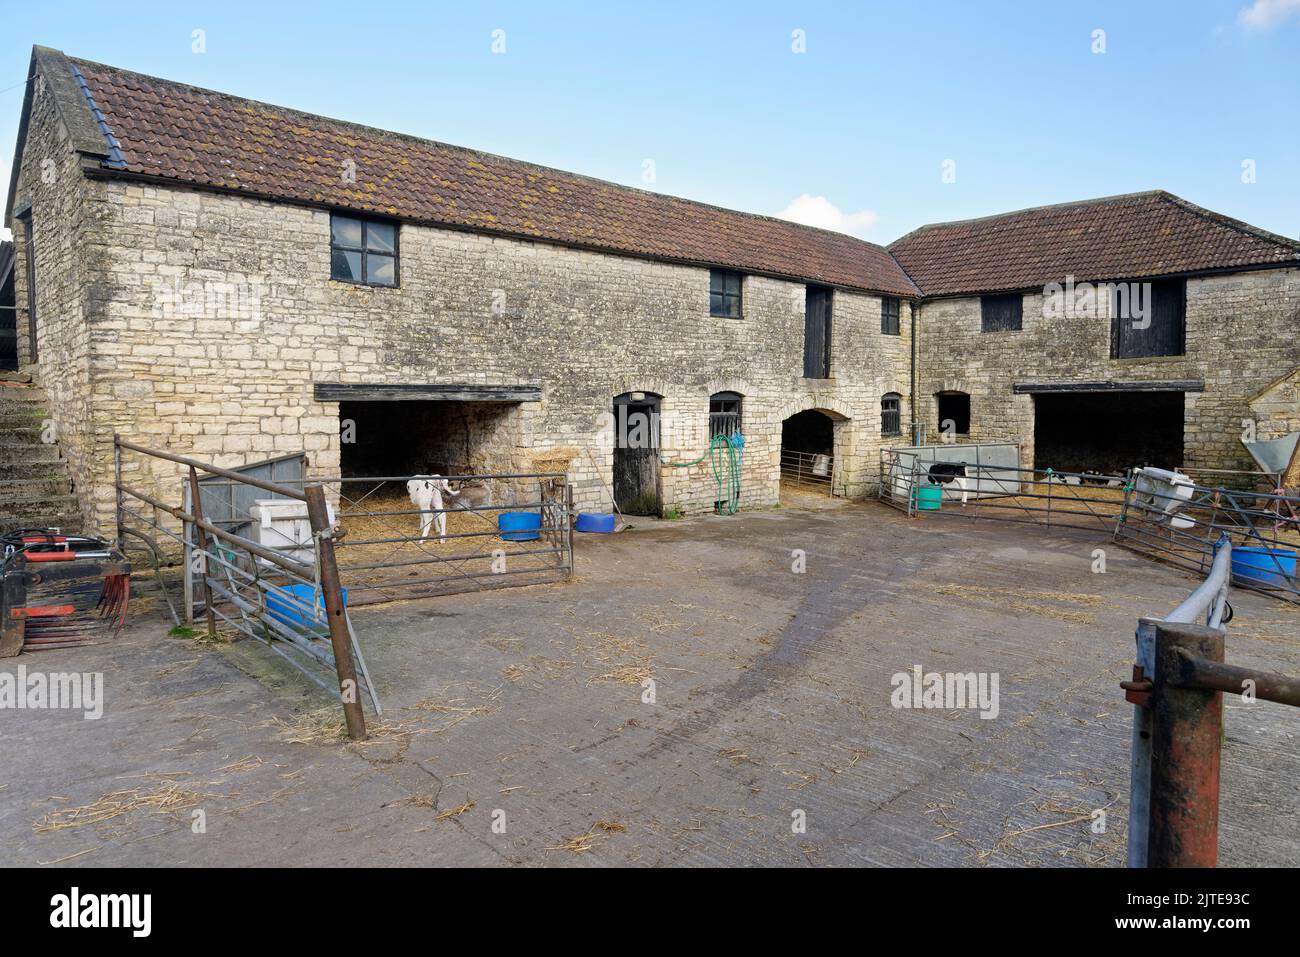 Church Farm, with old stone barns and calves (Bos taurus), Stanton Prior, near Markbury, Bath and northeast Somerset, February 2021. Stock Photo